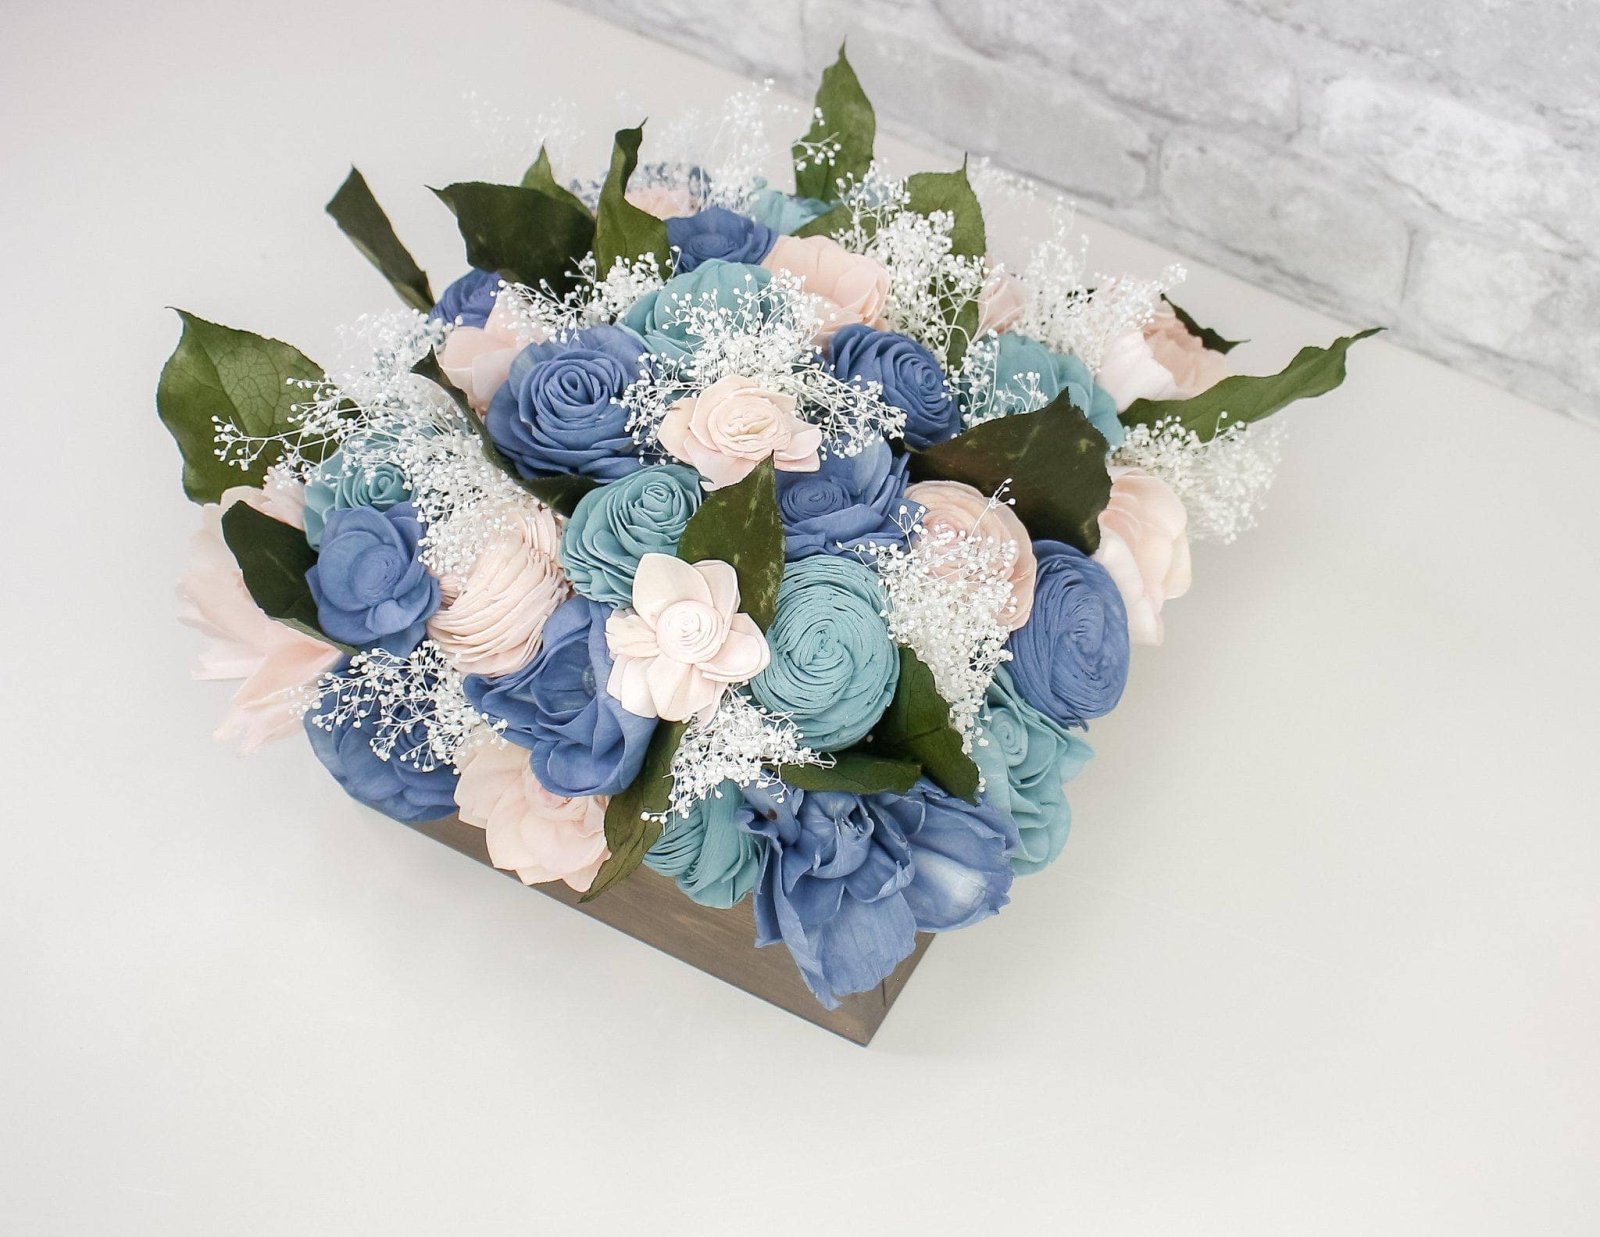 So Sweet Wedding Centerpiece – Sola Wood Flowers